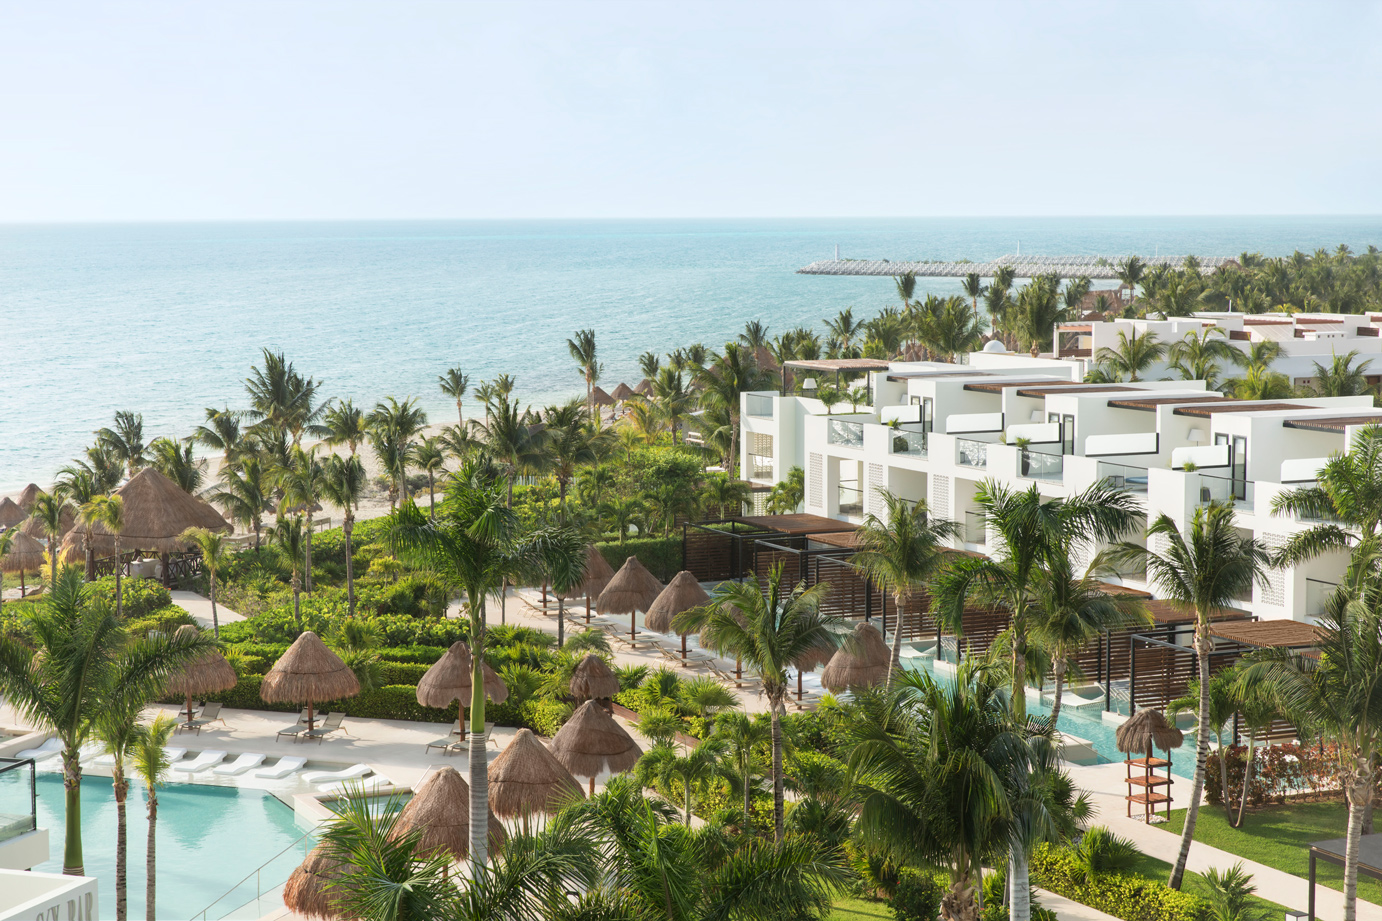 Finest Playa Mujeres resort for destination weddings